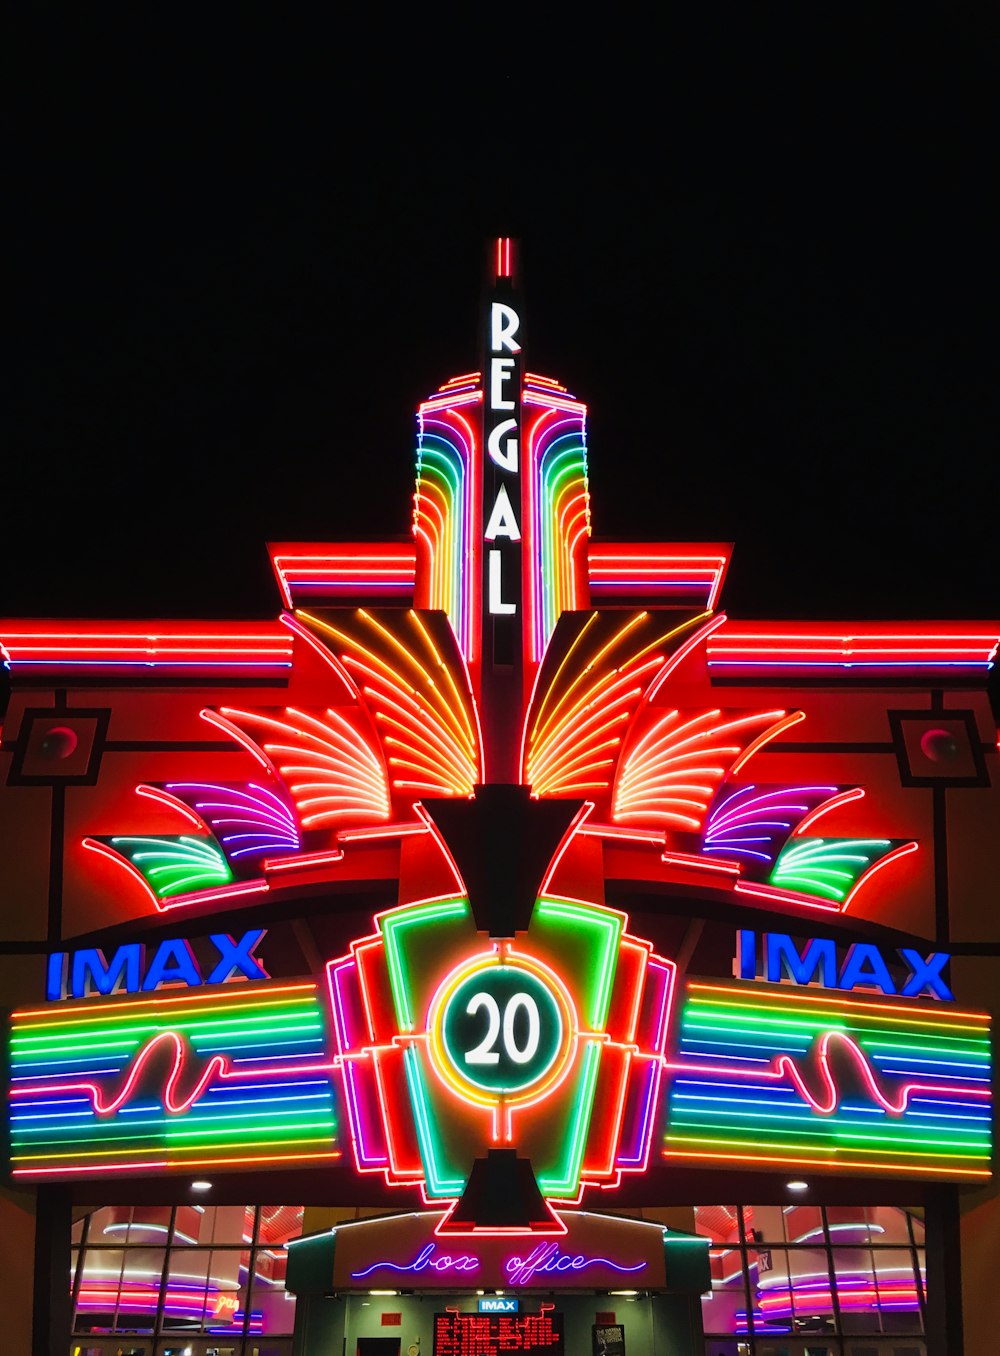 Imax Imax building